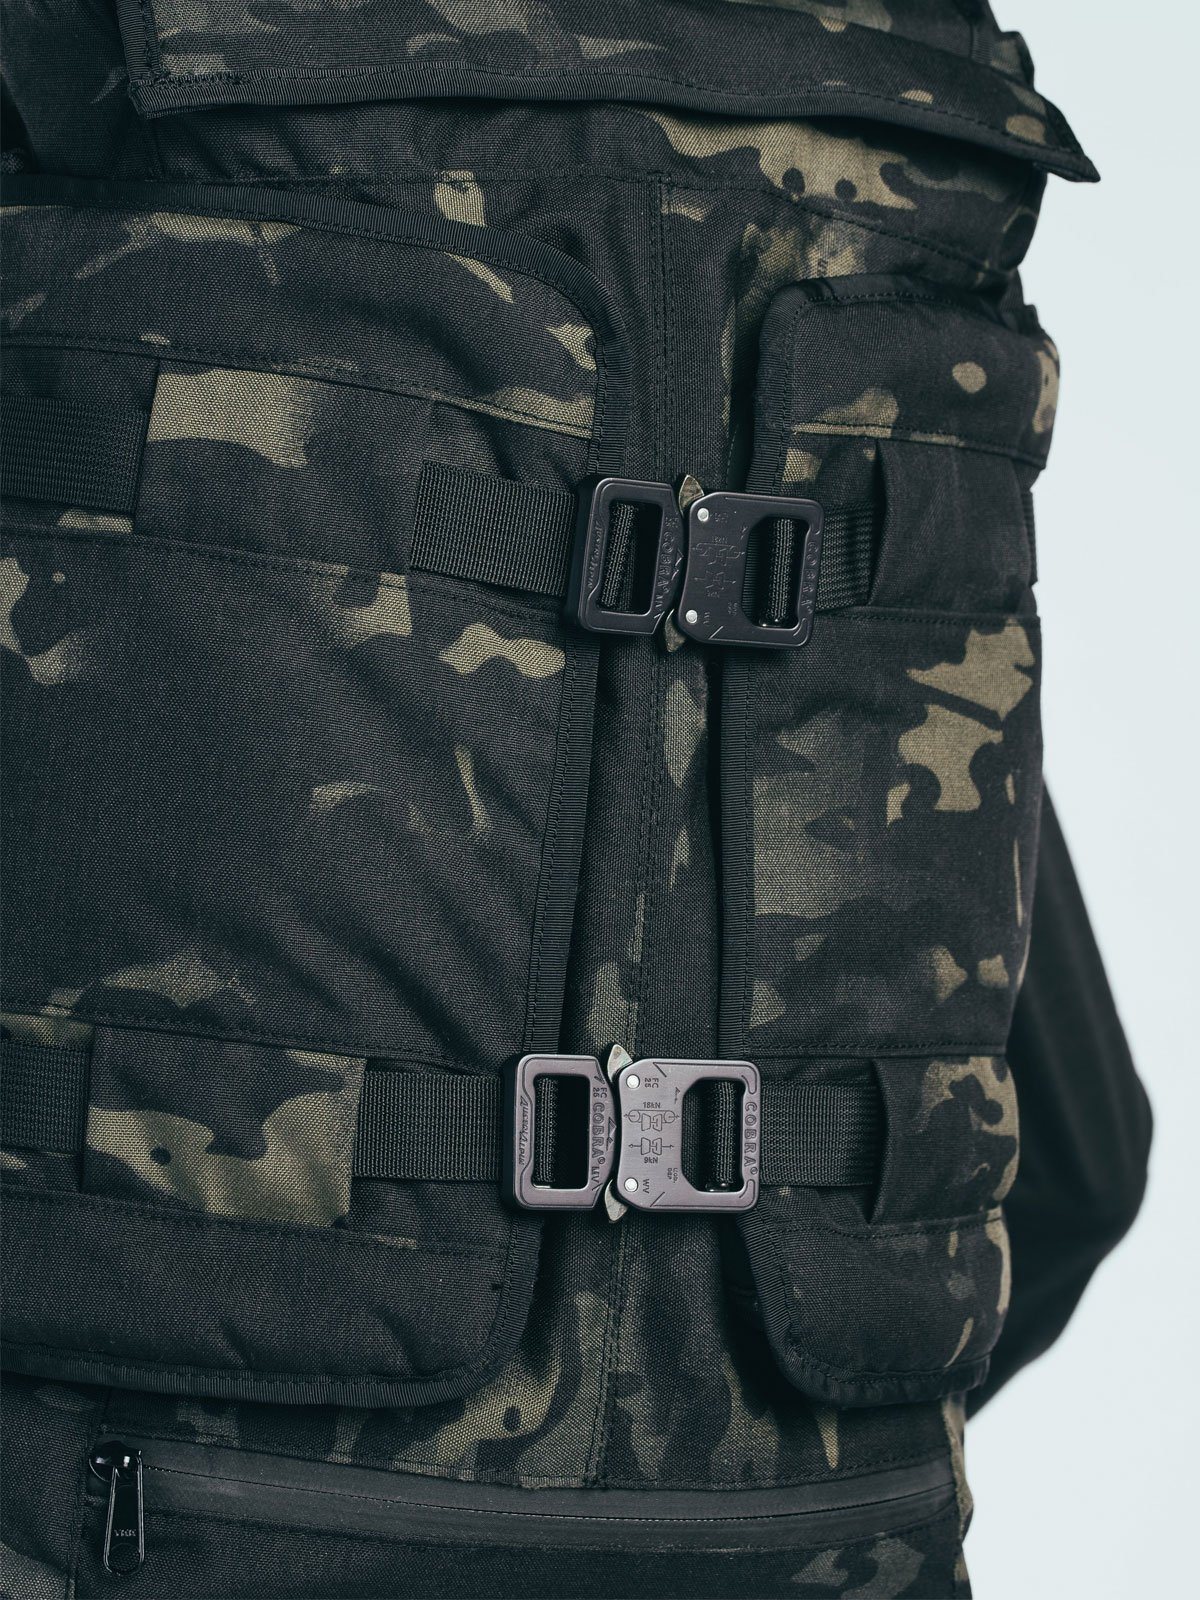 Cobra® Buckle Set : HT500 & Black Camo Rhake by Mission Workshop - Weatherproof Bags & Technical Apparel - San Francisco & Los Angeles - Built to endure - Guaranteed forever